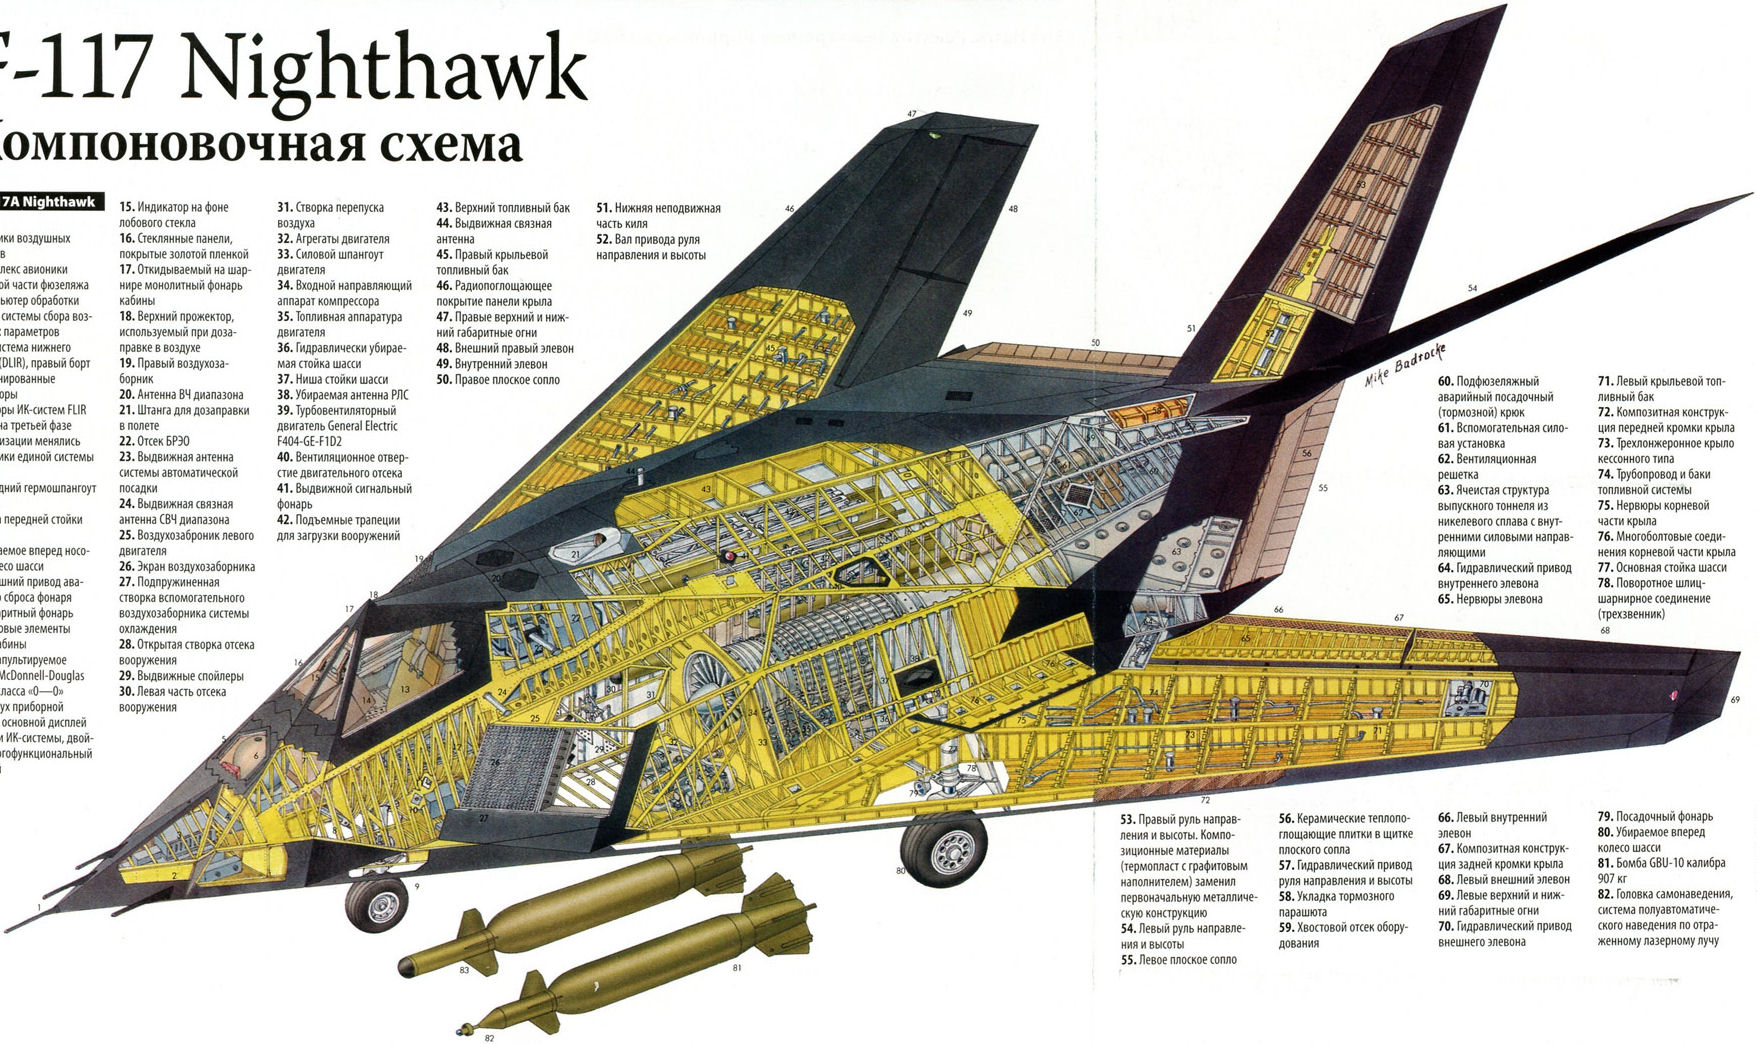 Amazing Lockheed F-117 Nighthawk Pictures & Backgrounds